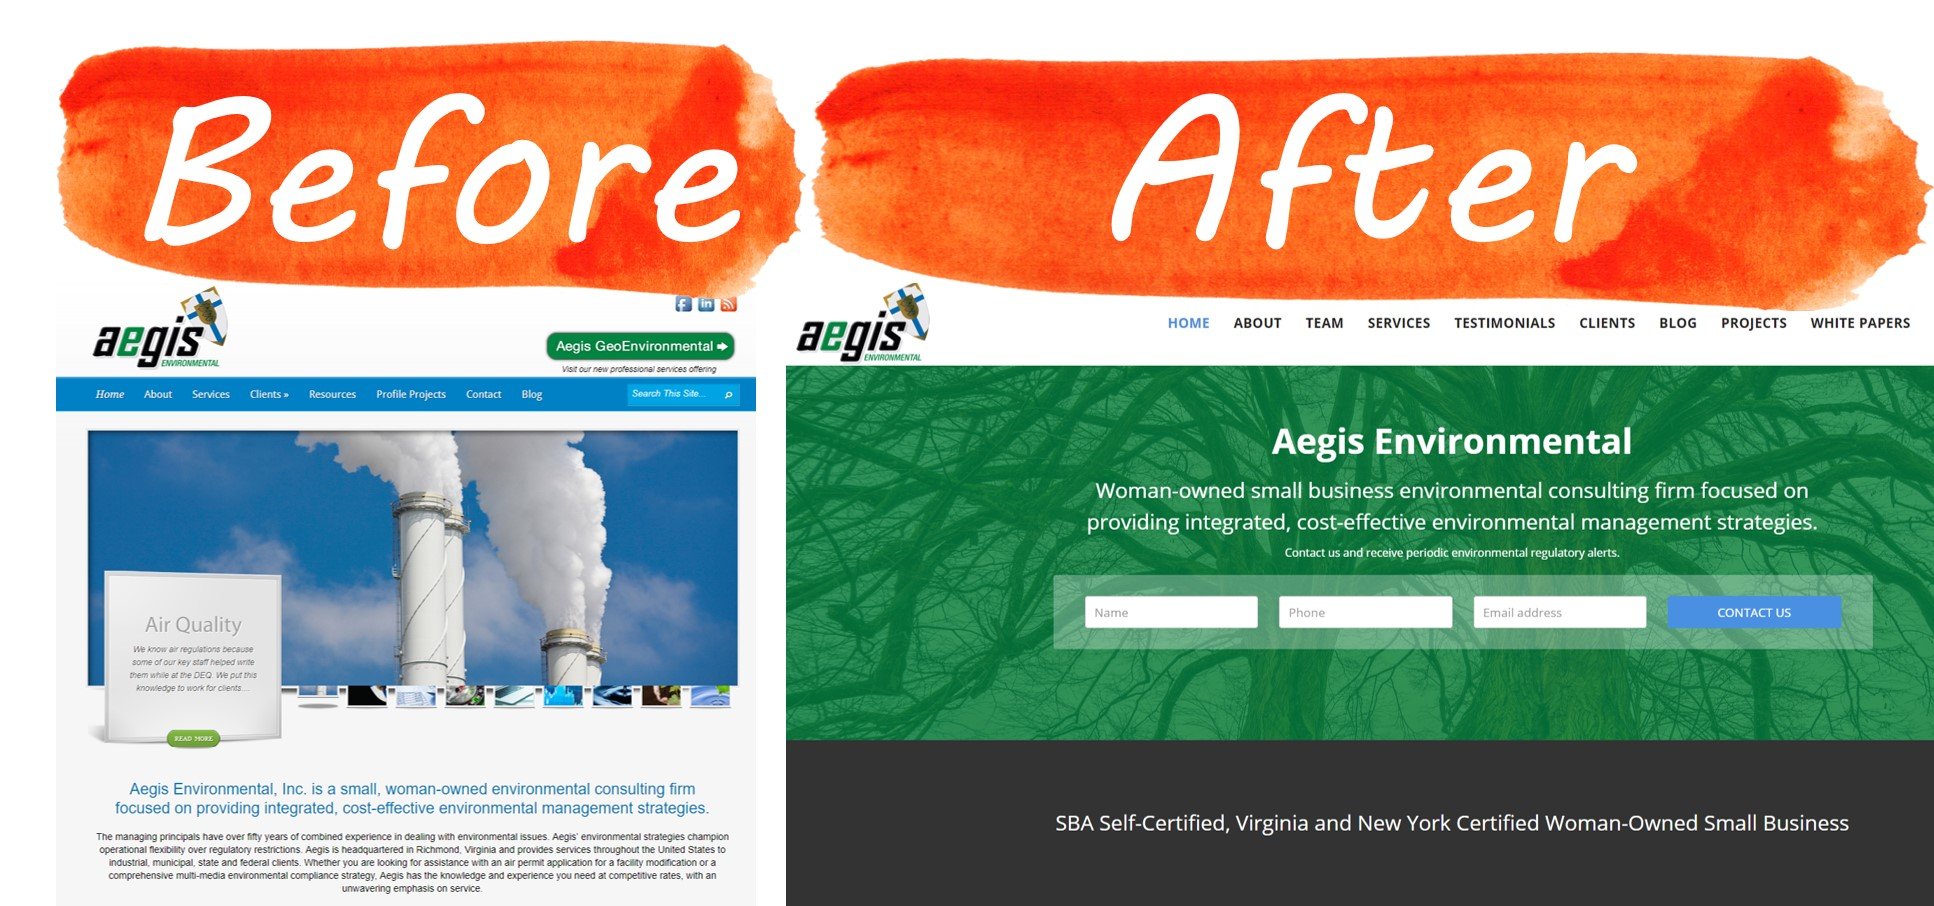 Aegis Environmental Website Announcement